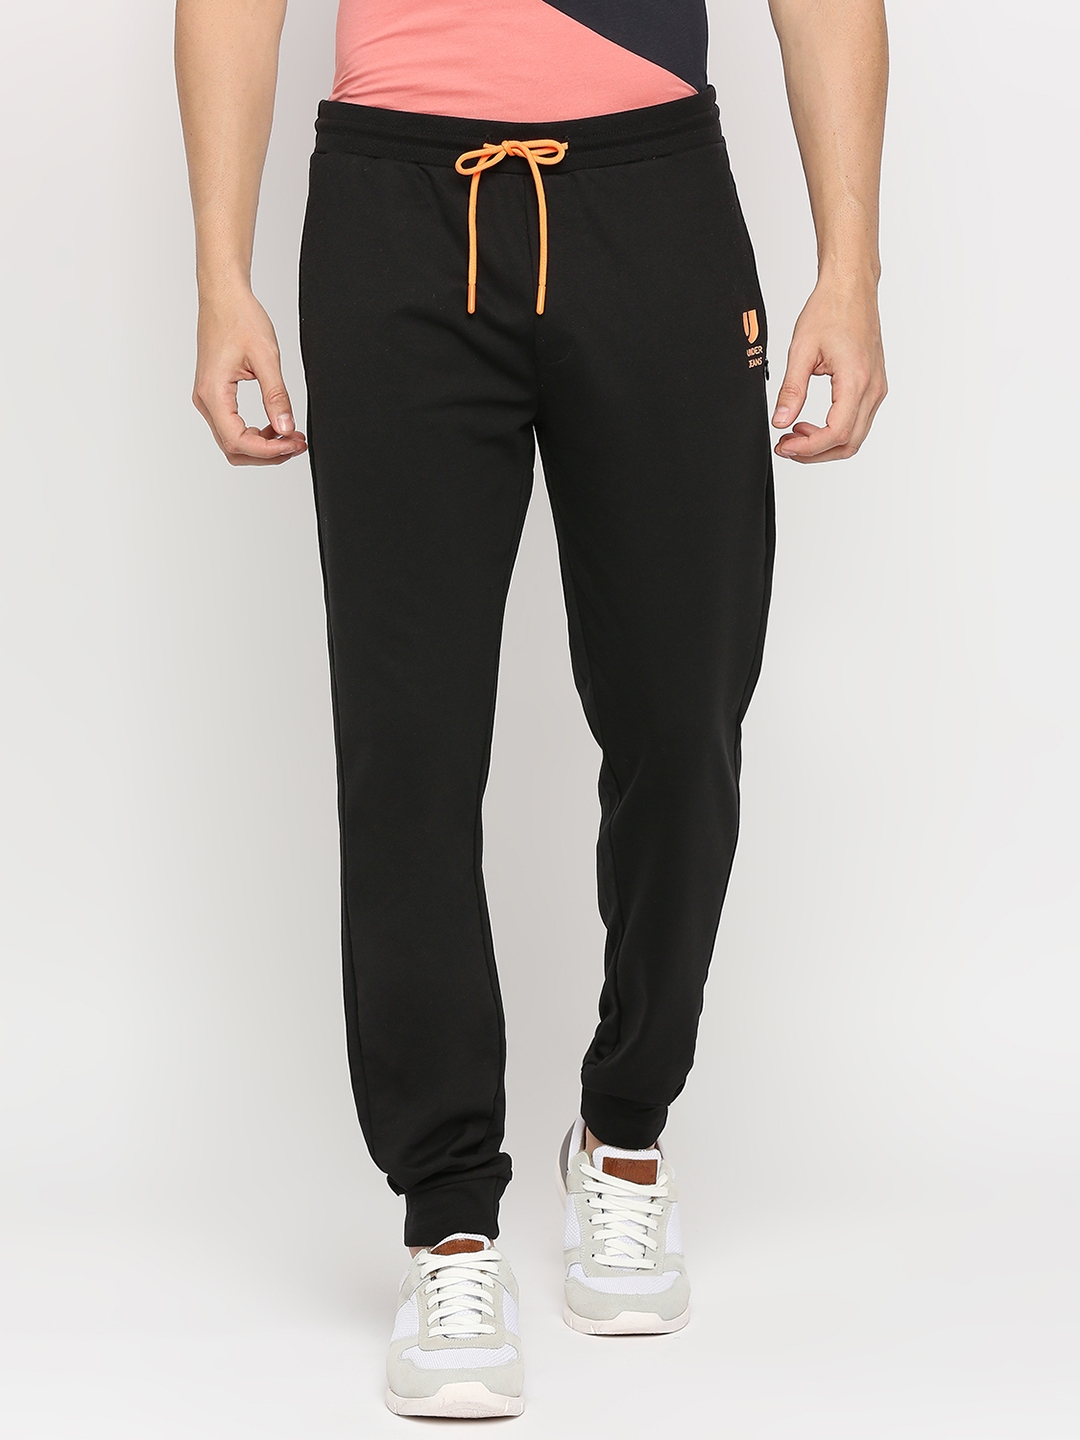 spykar | Men's Black Cotton Solid Trackpants 0